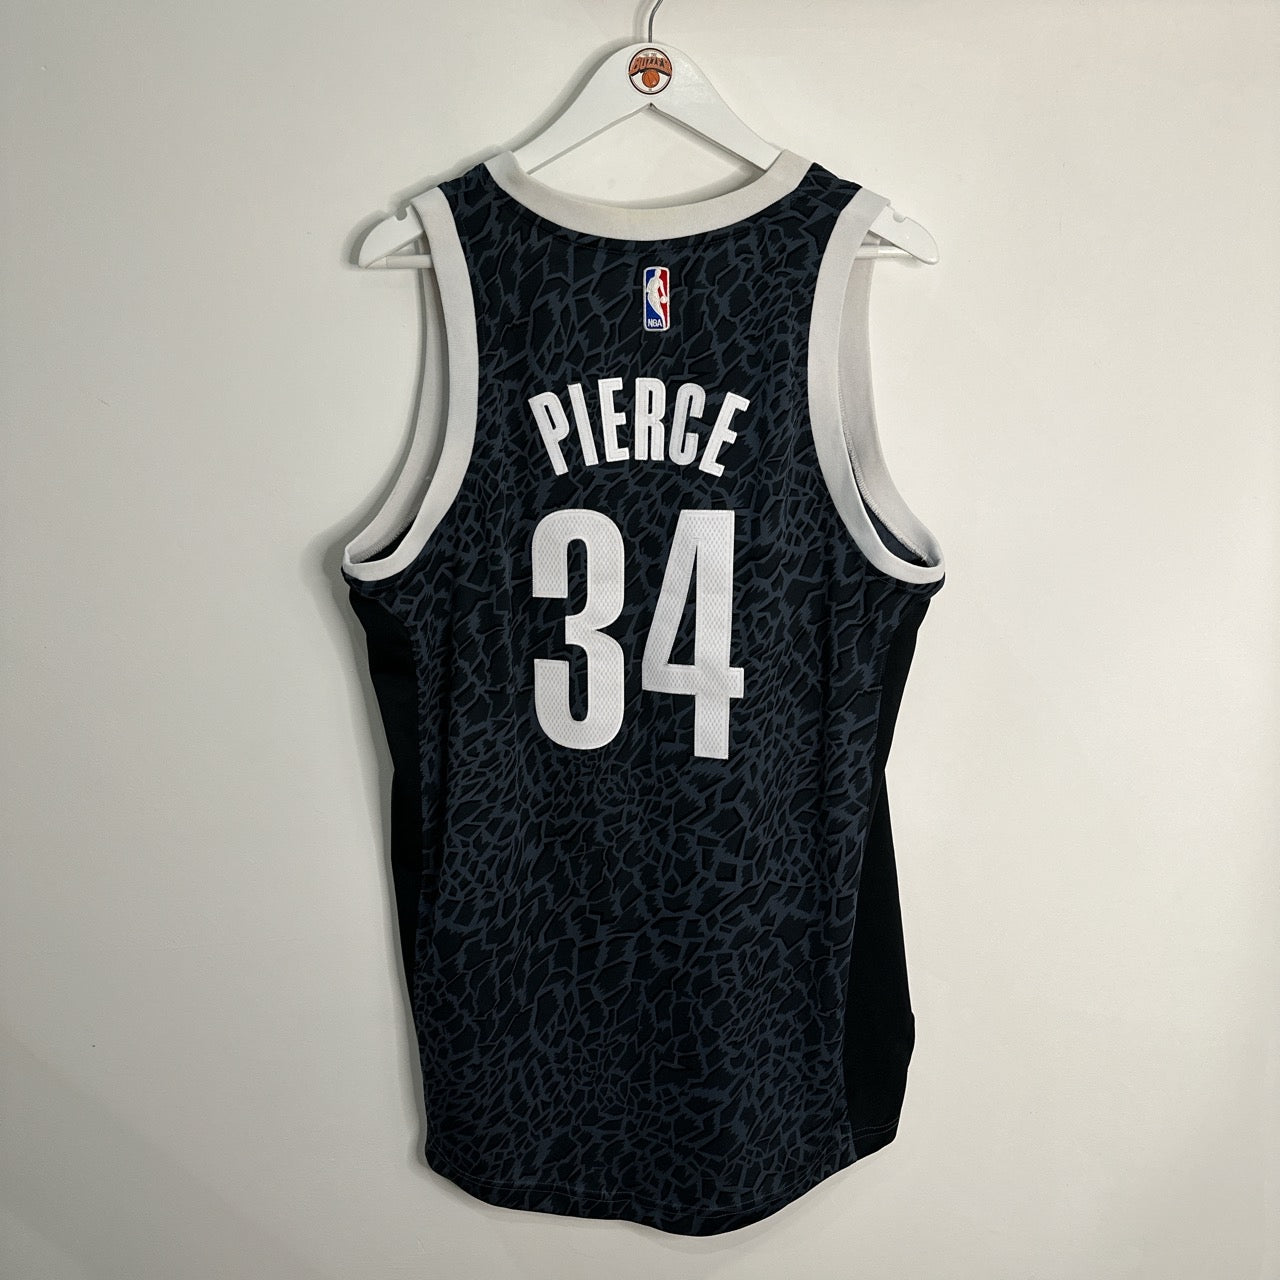 Brooklyn Nets Paul Pierce Adidas jersey - Large